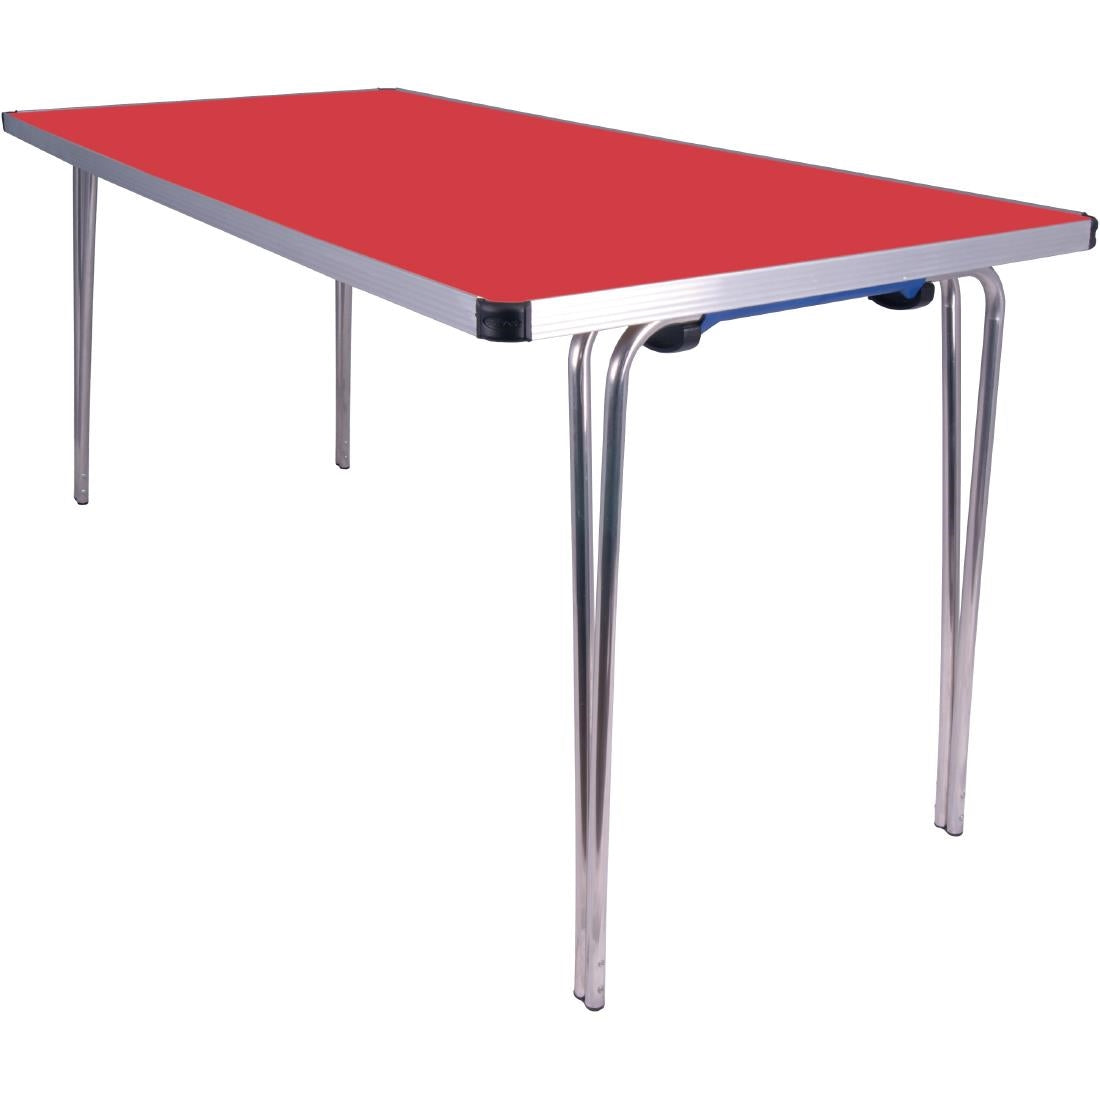 DM697 Gopak Contour Folding Table Red 5ft JD Catering Equipment Solutions Ltd